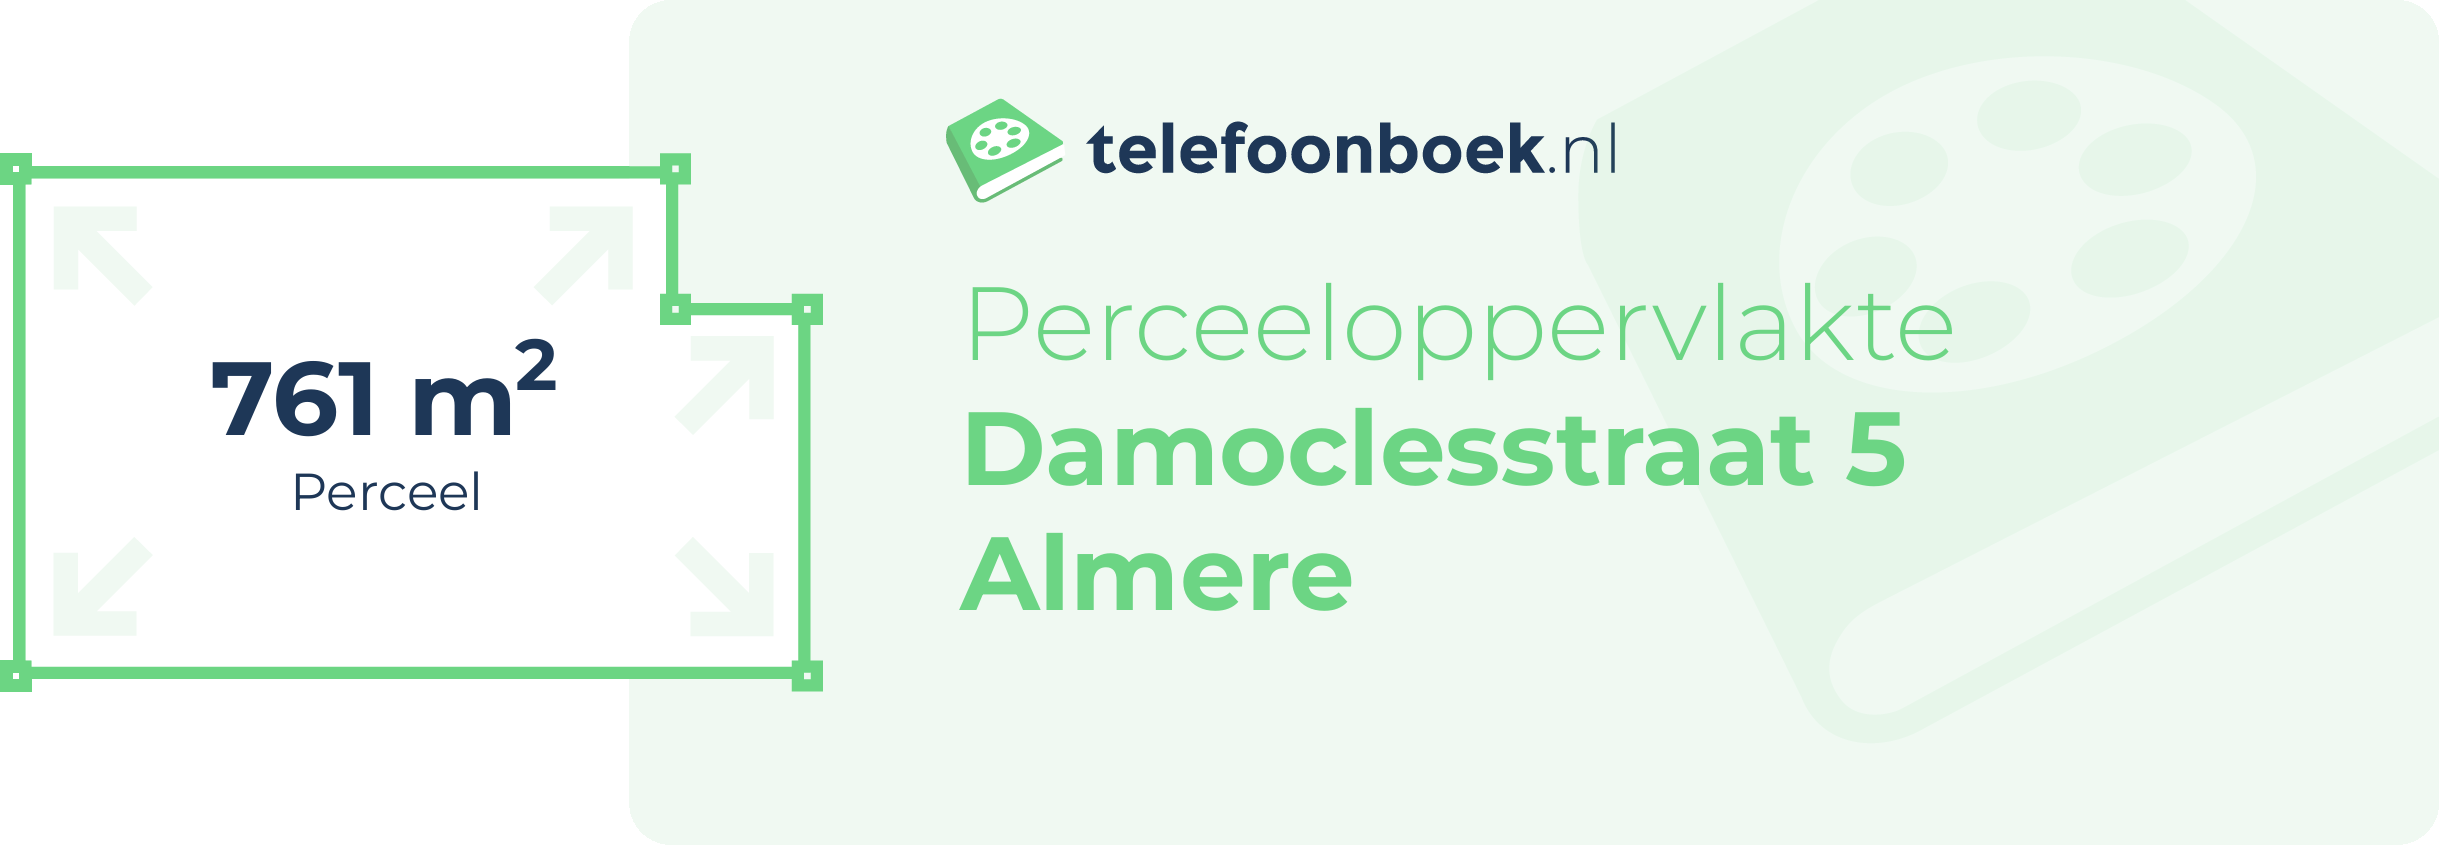 Perceeloppervlakte Damoclesstraat 5 Almere